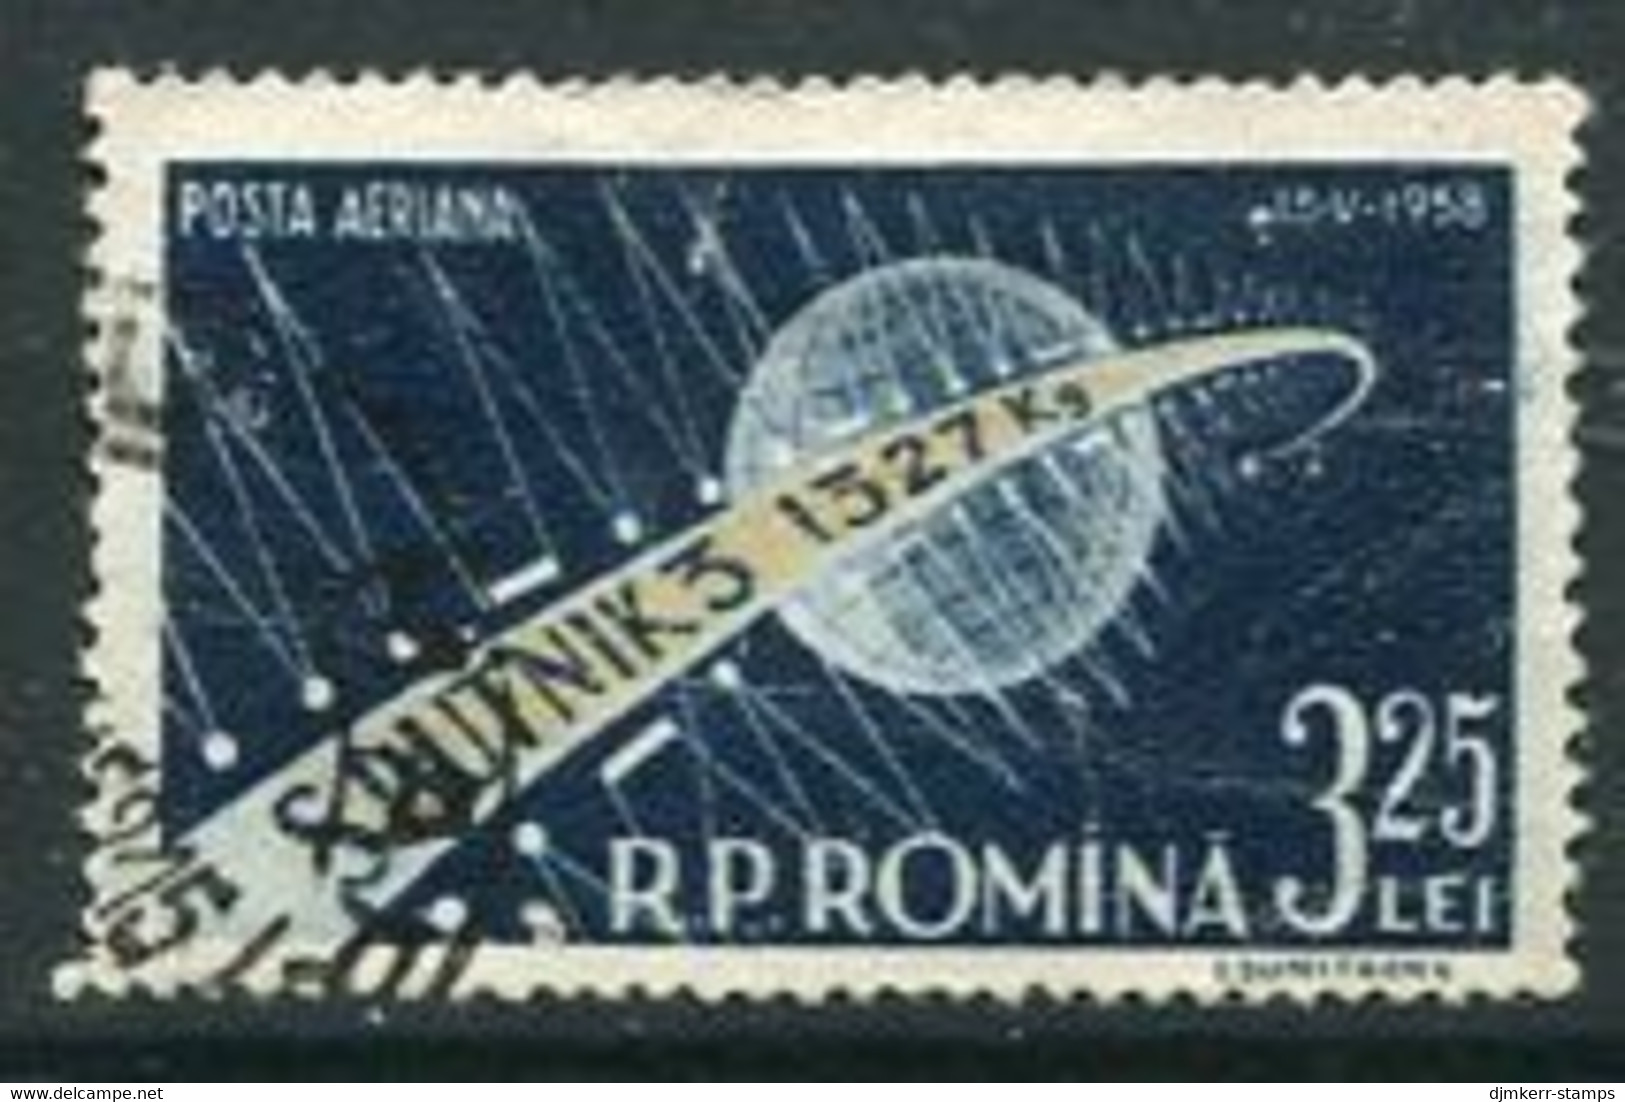 ROMANIA 1958 Launch Of Sputnik 3 Satellite Used.  Michel 1733 - Usado